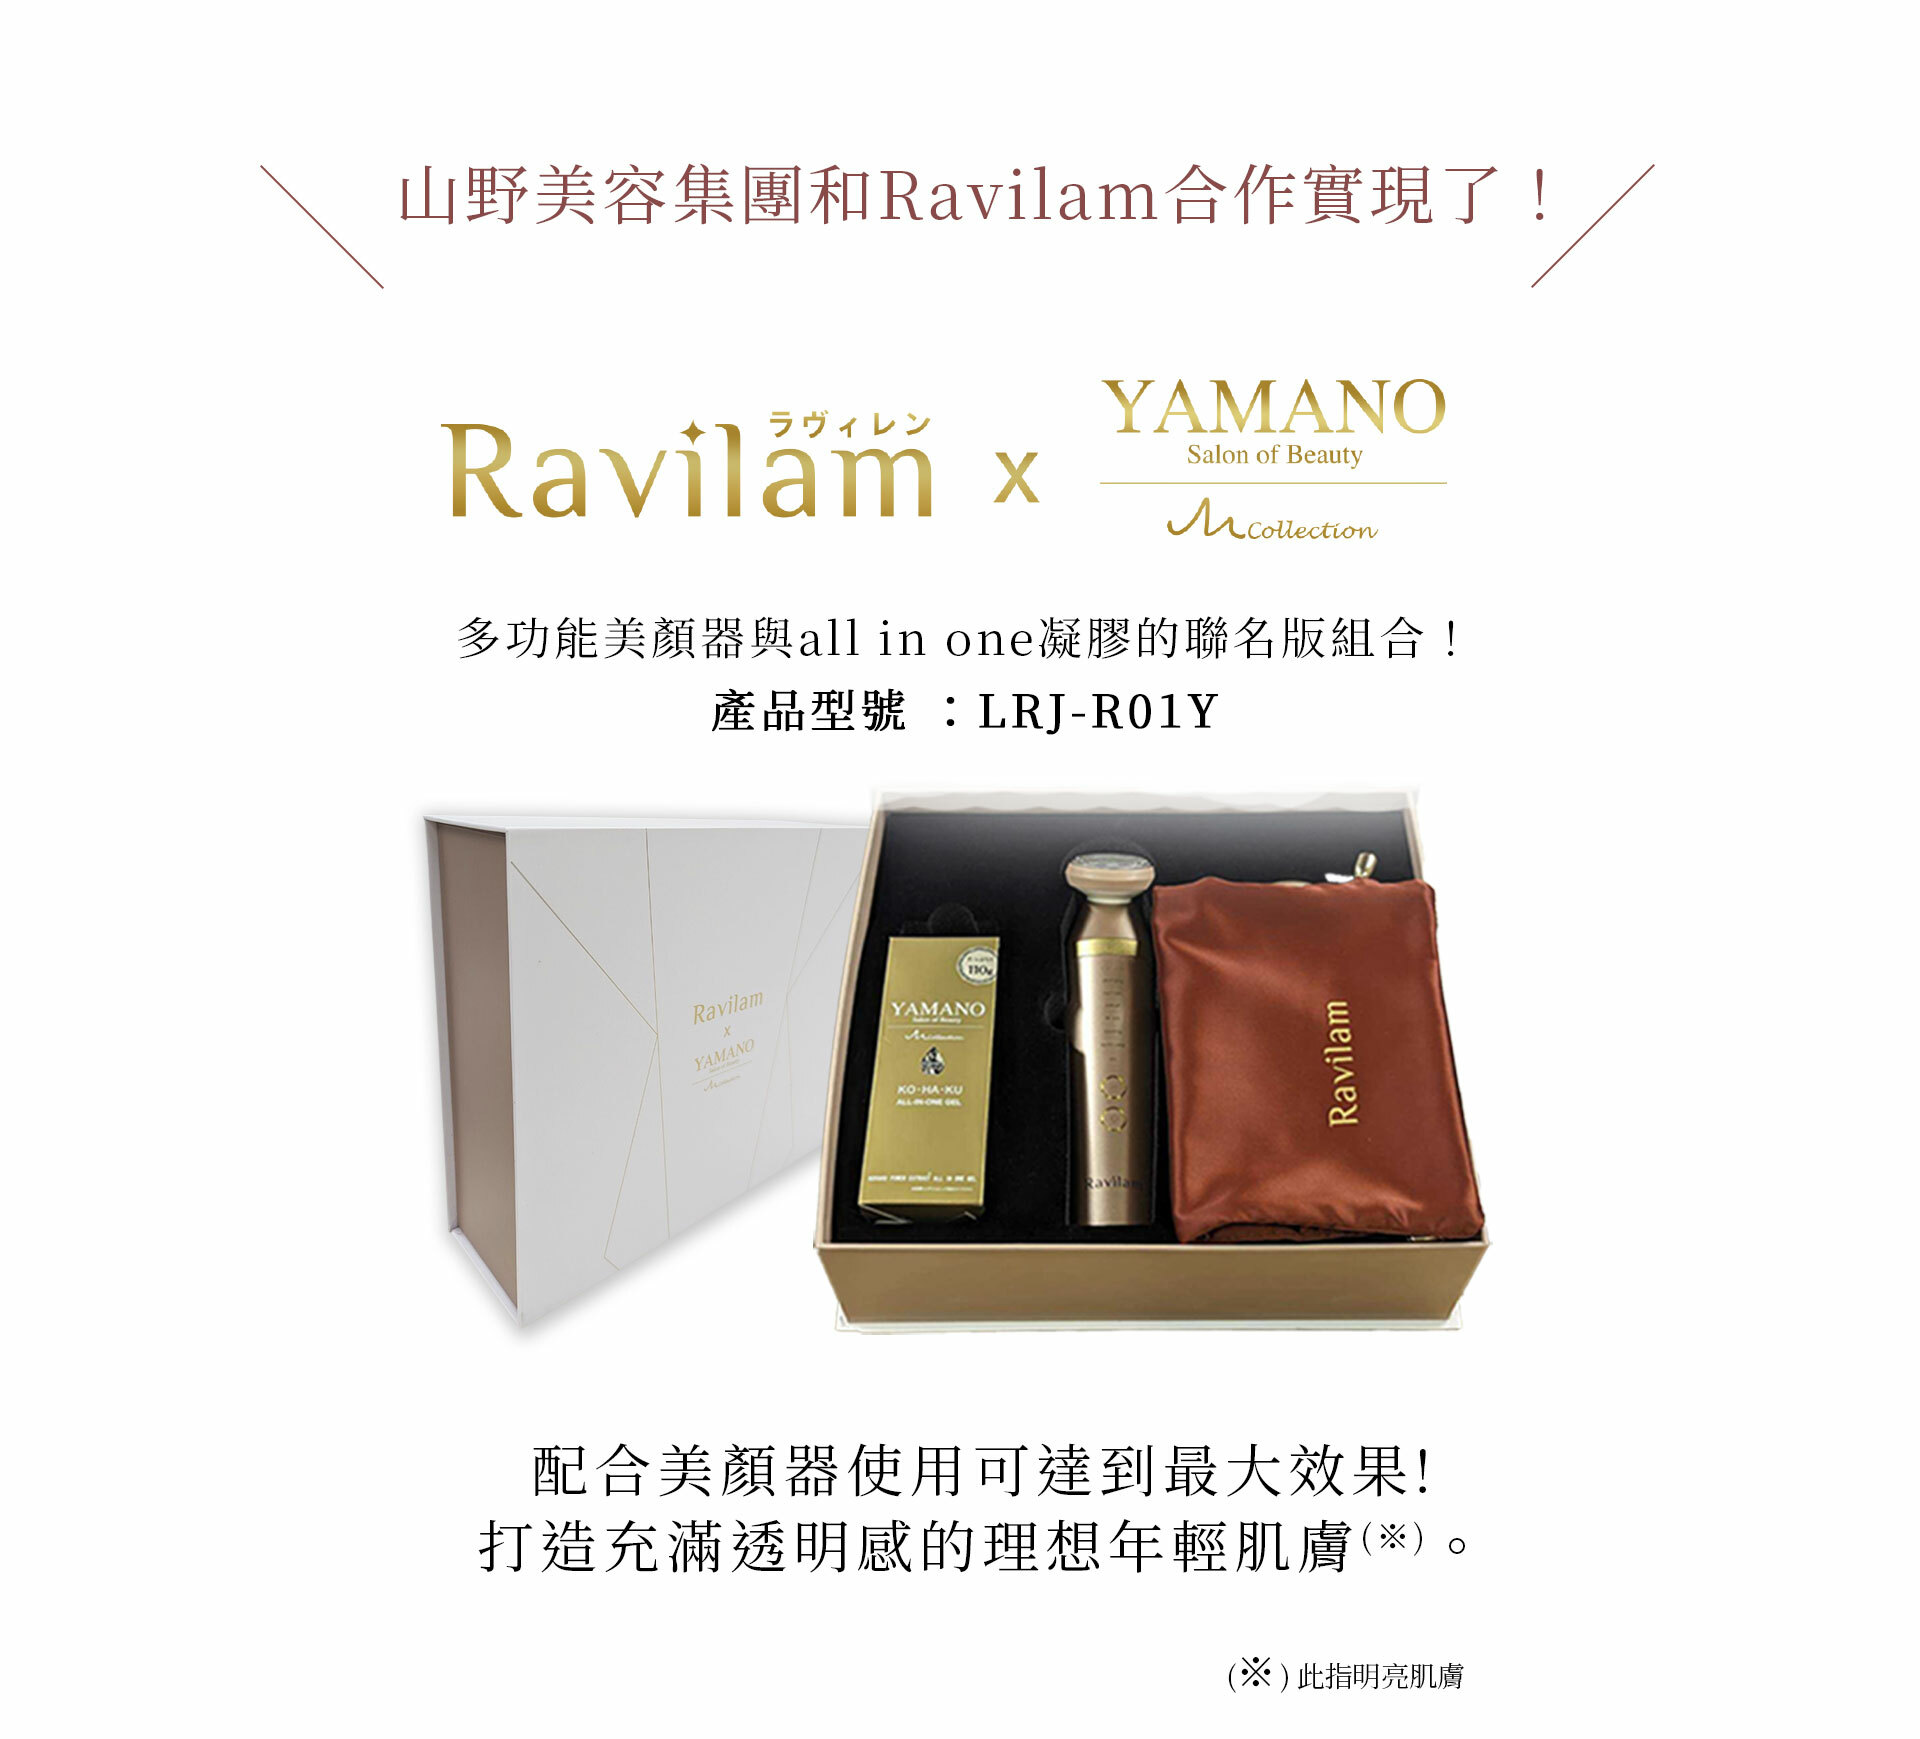 yaman美容儀Ravilam日本製造安全可靠